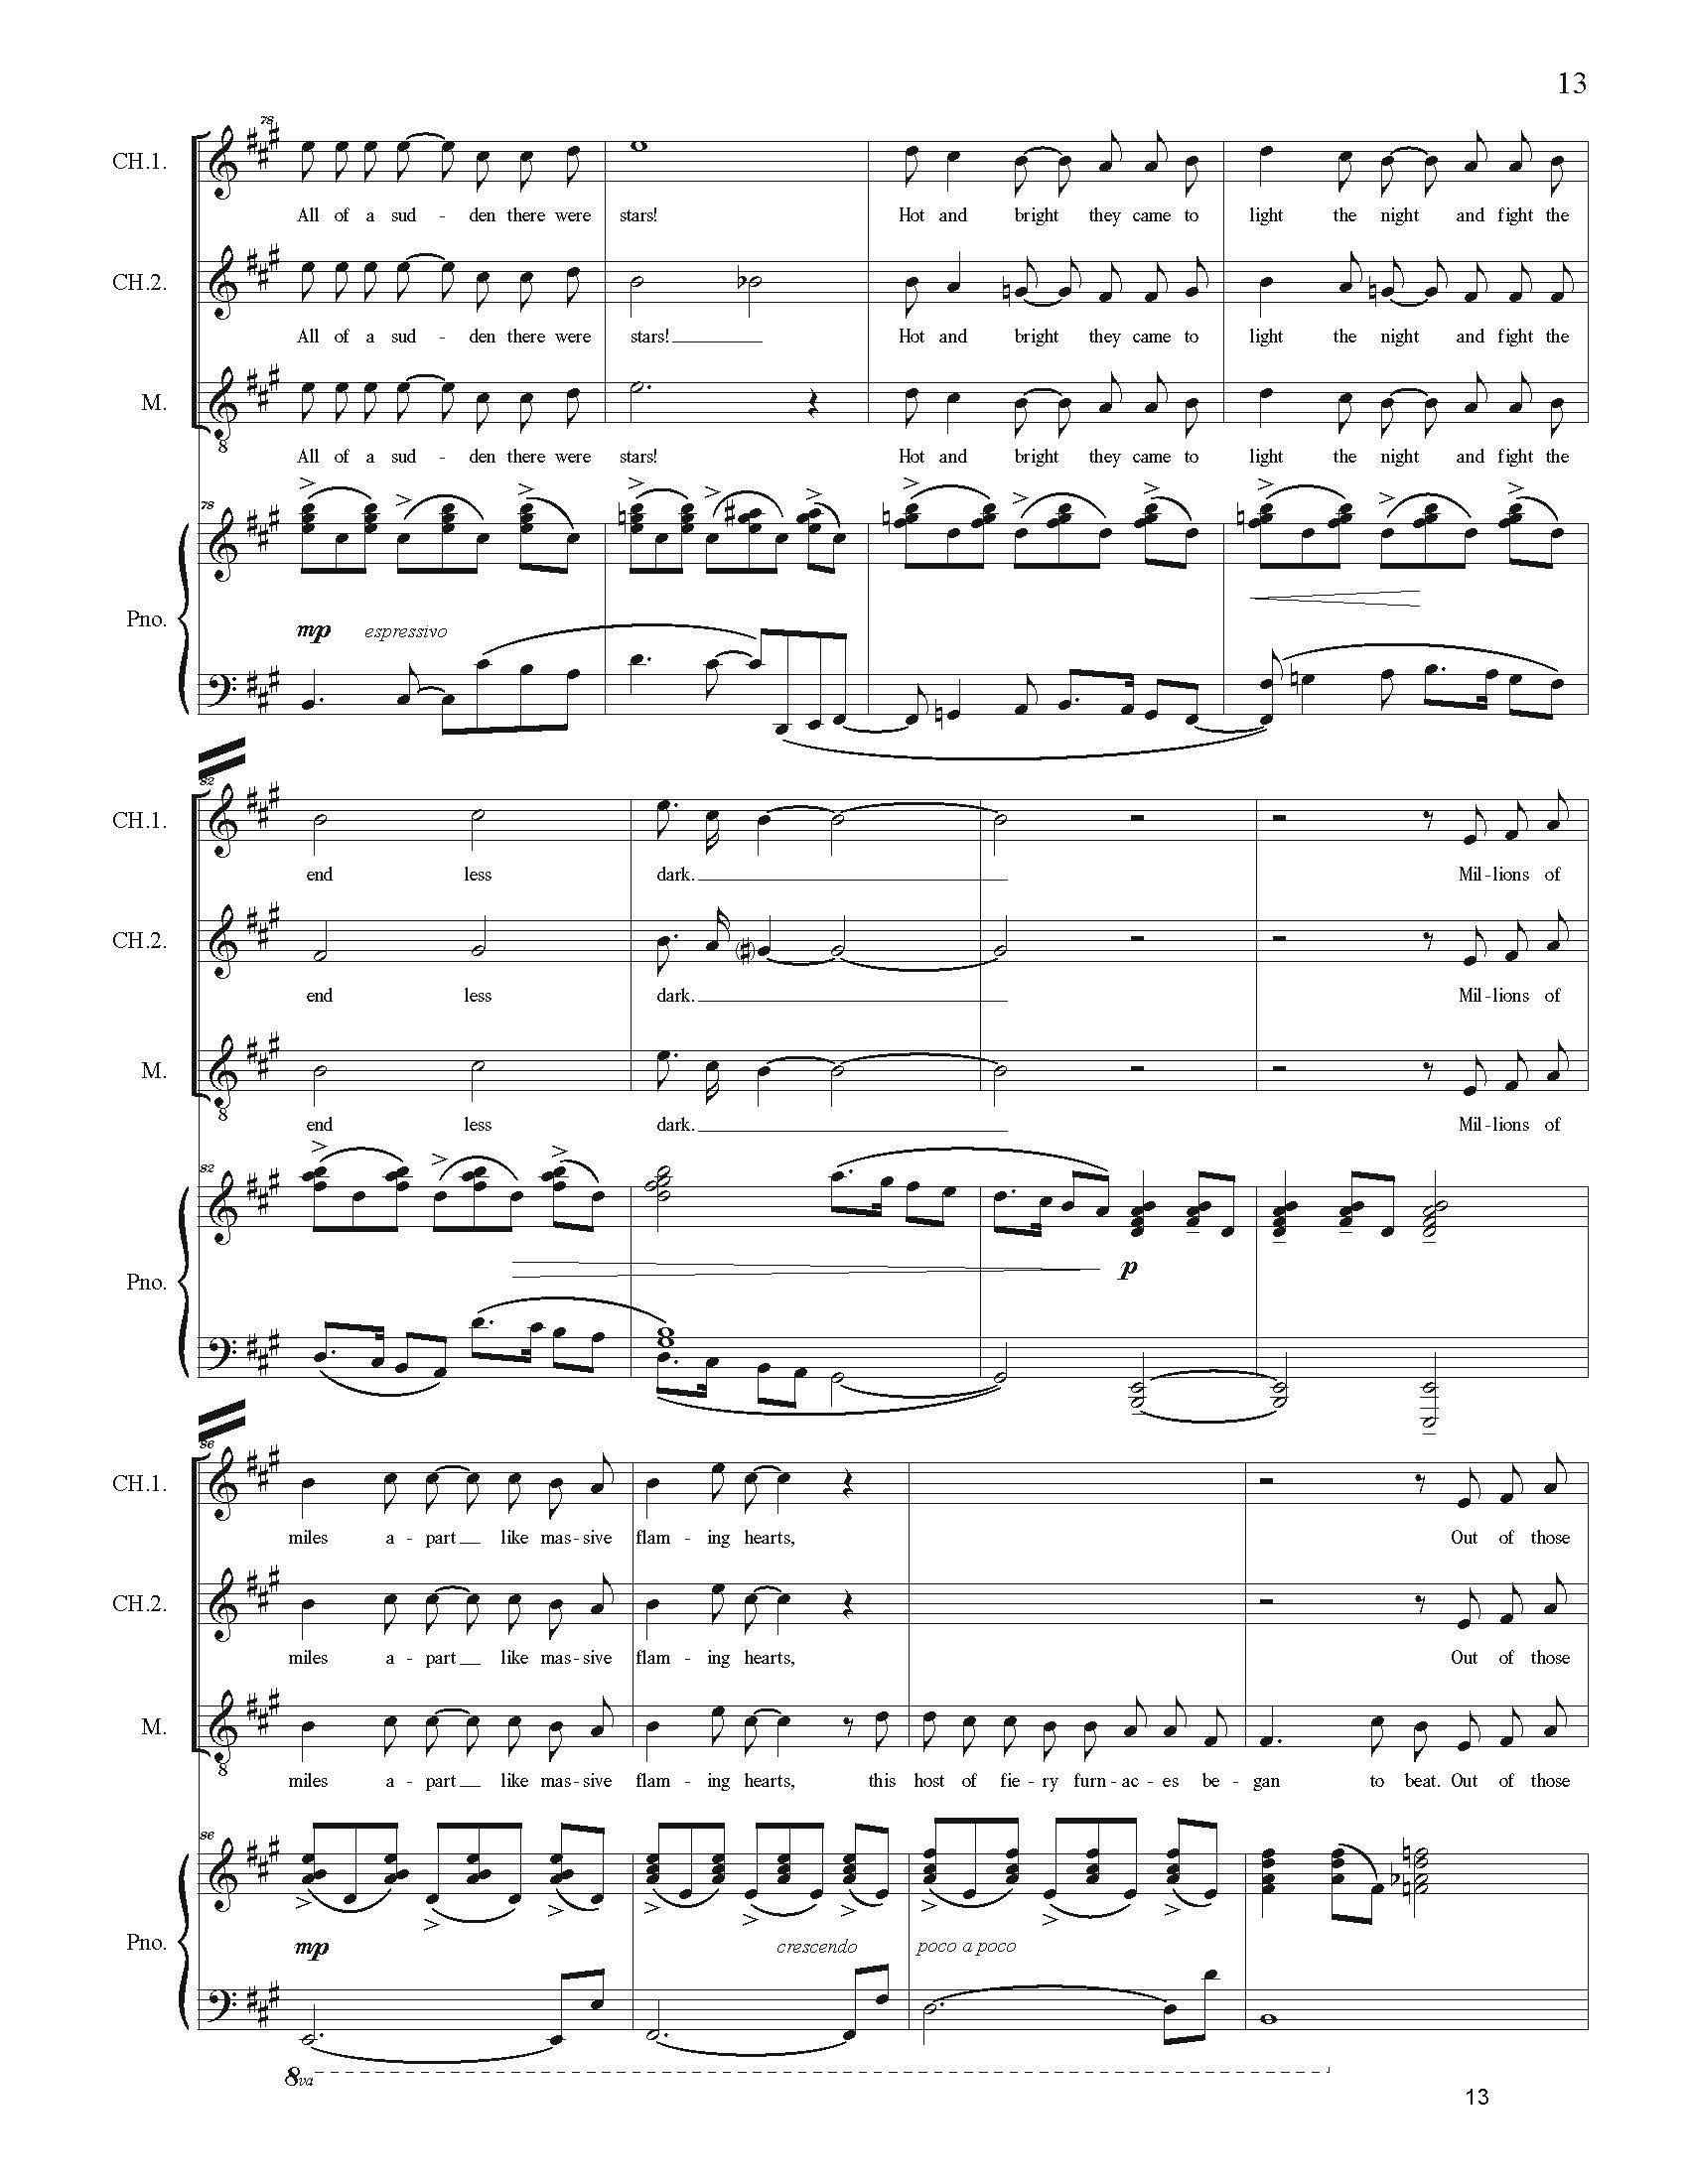 FULL PIANO VOCAL SCORE DRAFT 1 - Score_Page_013.jpg